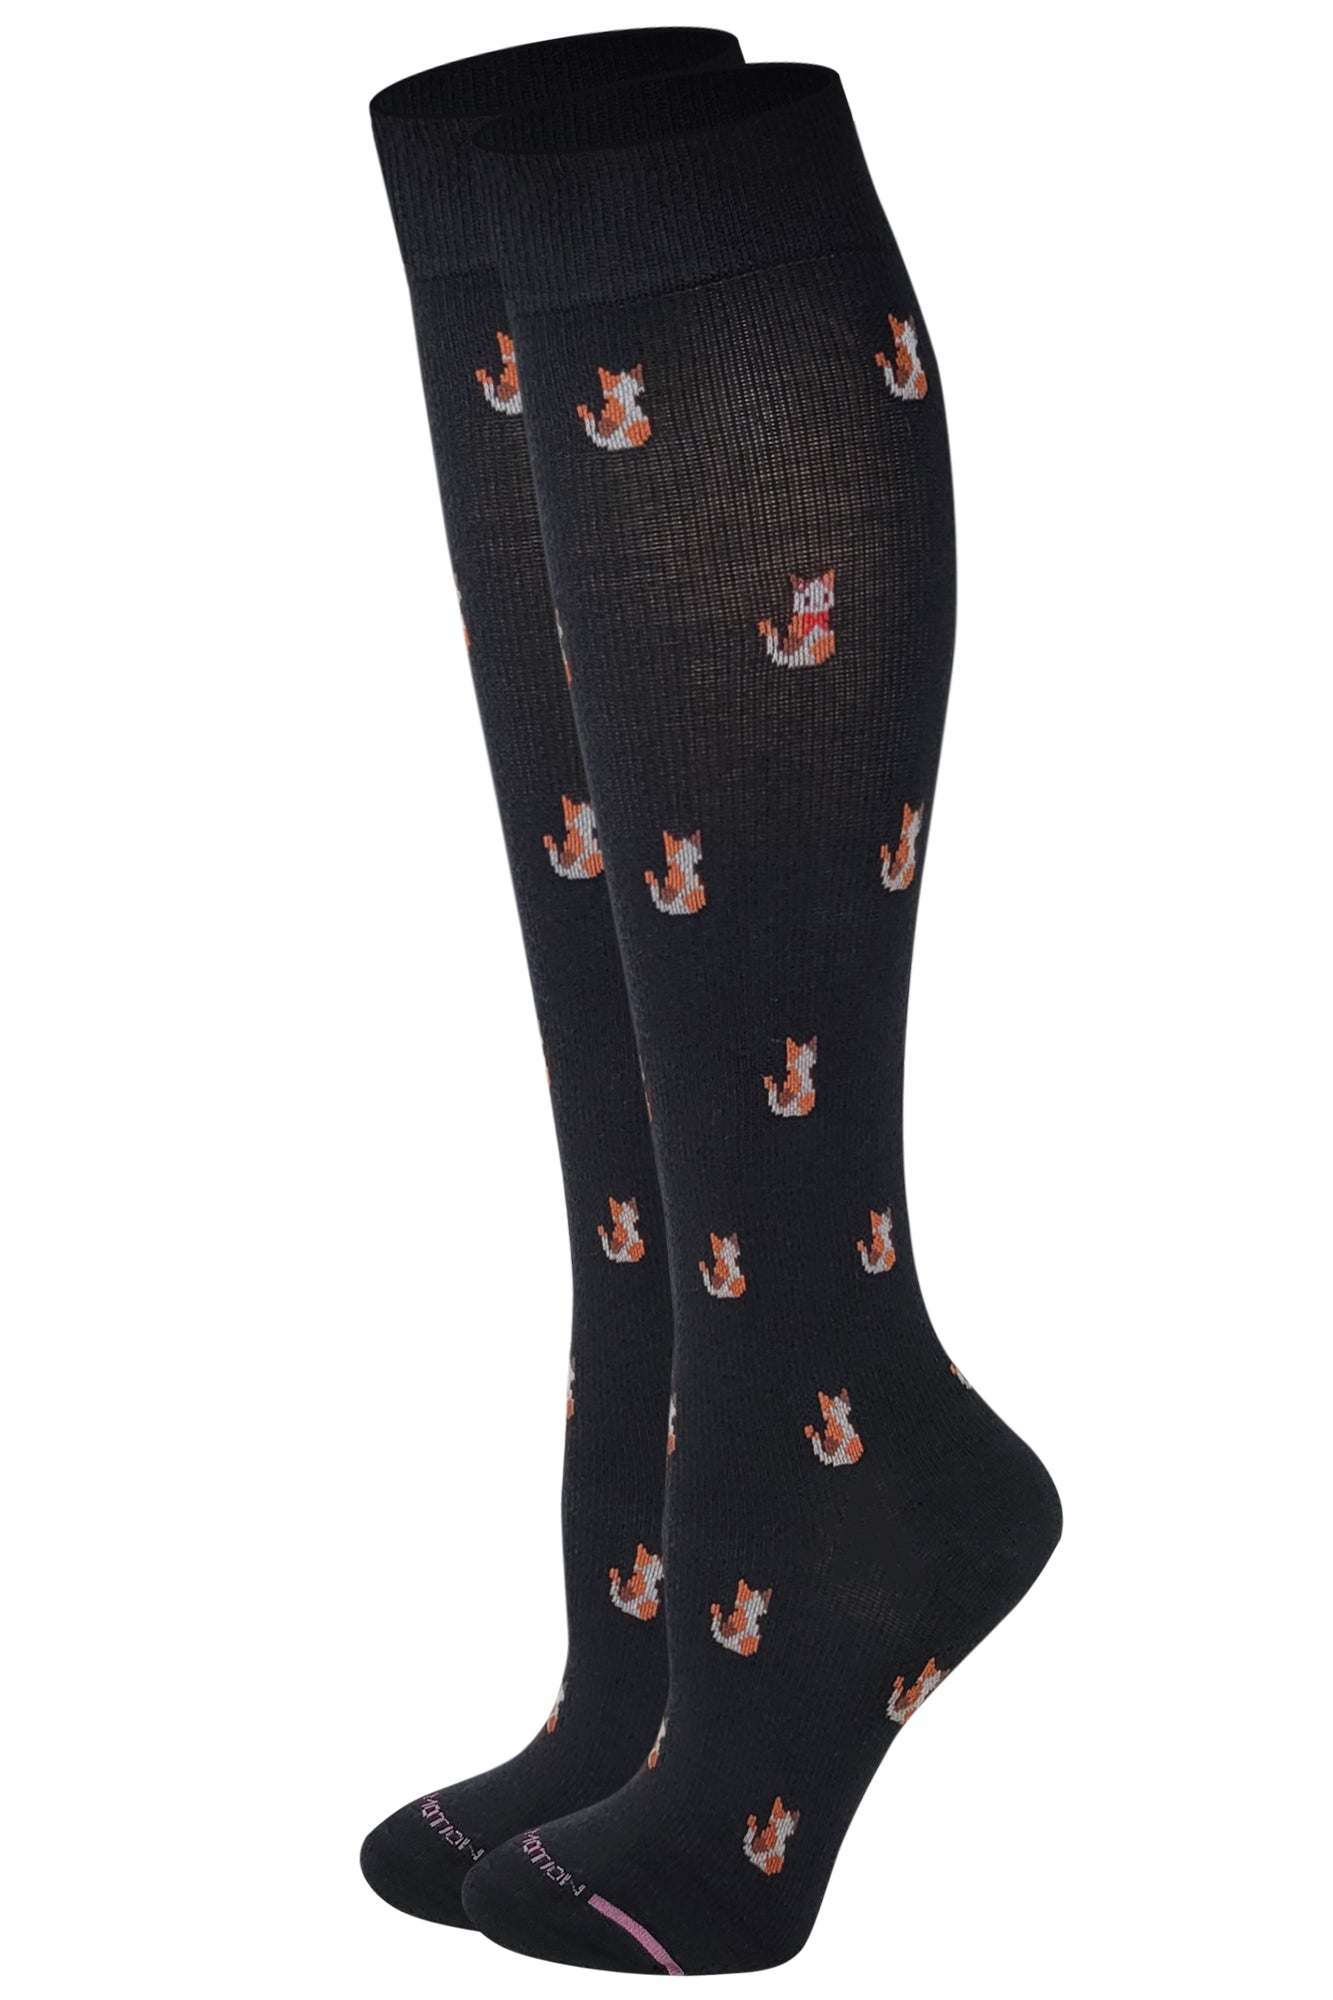 Dr. Motion Women Cute Cat Design Compression Knee High Socks